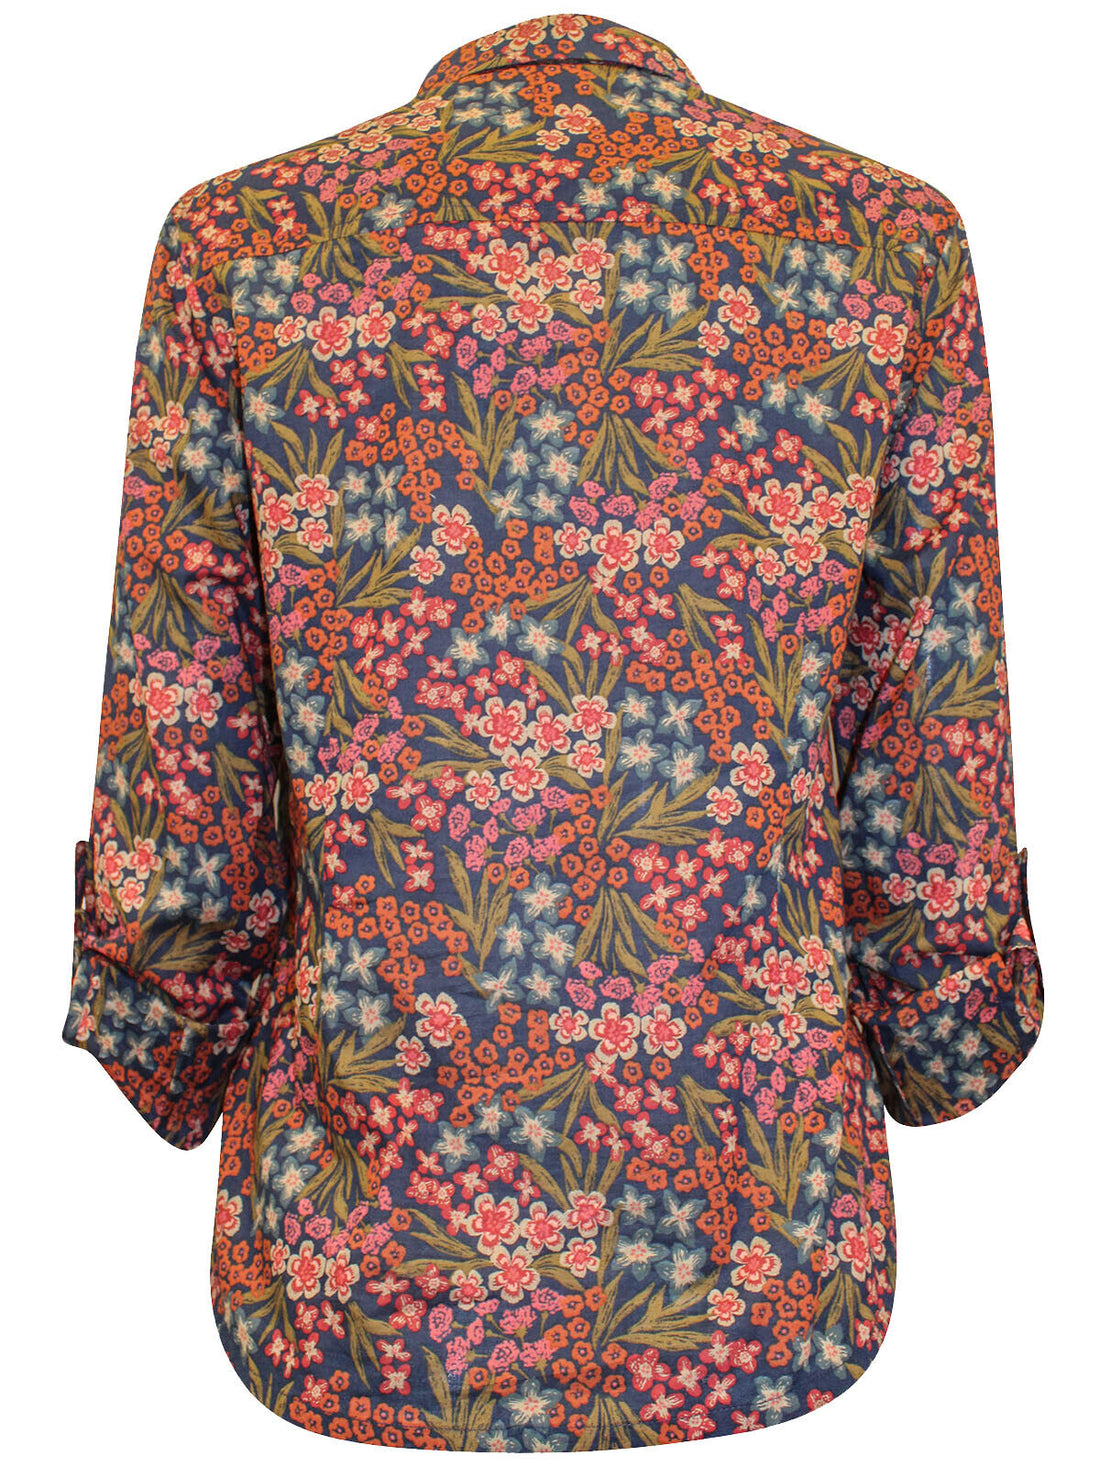 EX Seasalt Red Floral Larissa Organic Cotton Shirt Sizes 10, 12, 14, 16, 20, 24